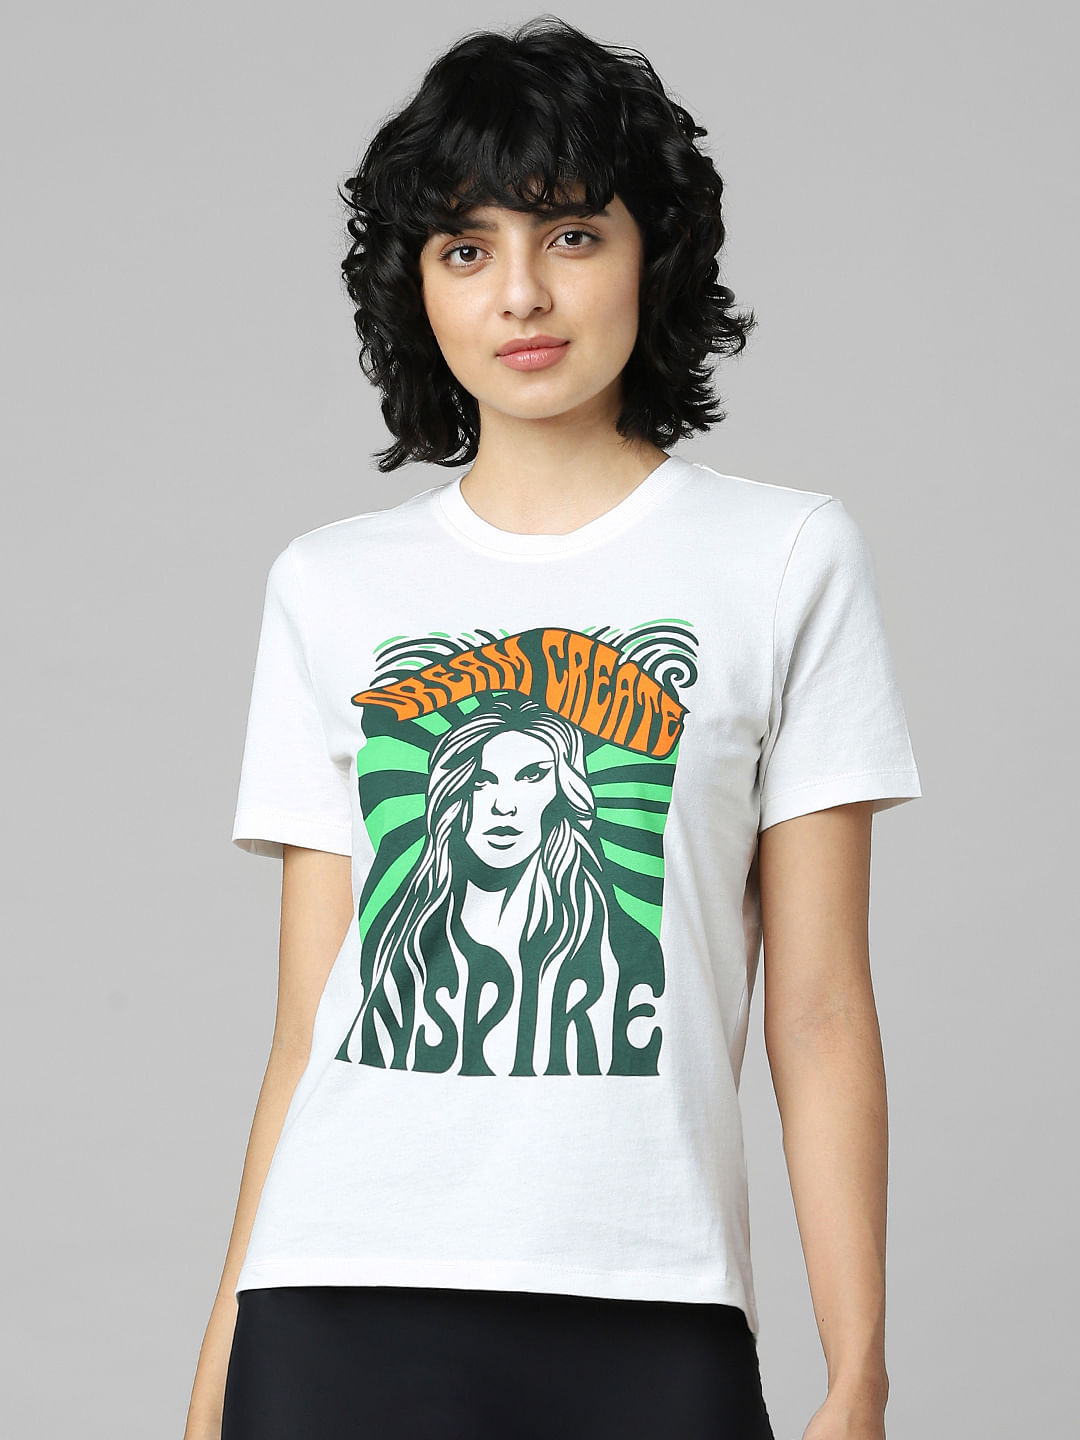 NoName T-shirt WOMEN FASHION Shirts & T-shirts Sequin White/Multicolored M discount 60% 